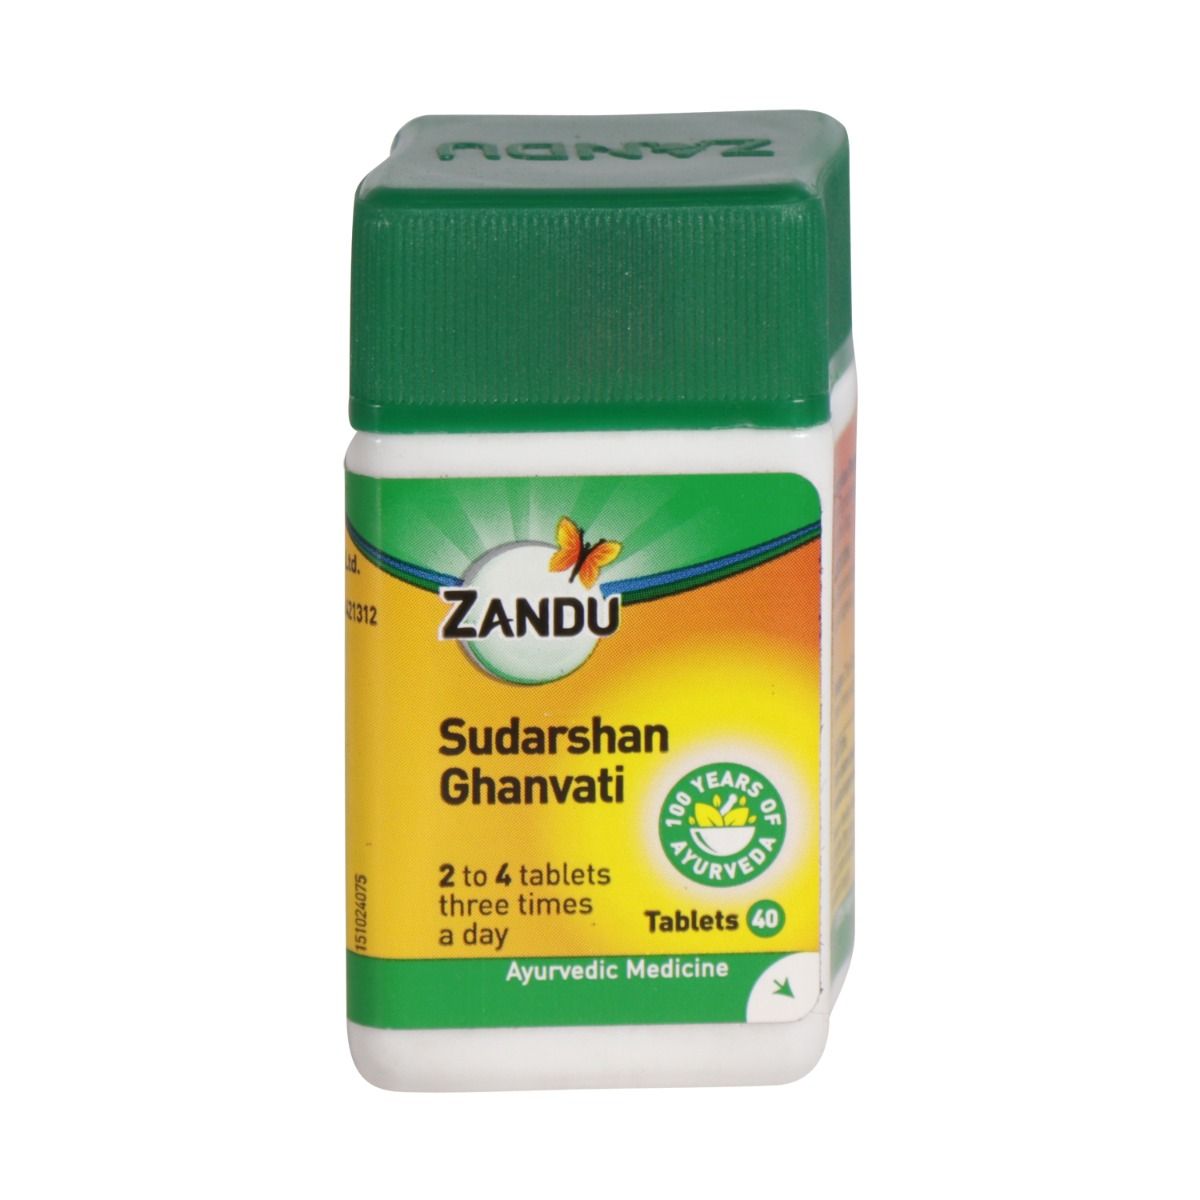 Zandu Sudarshan Ghanvati, 40 Tablets, Pack of 1 